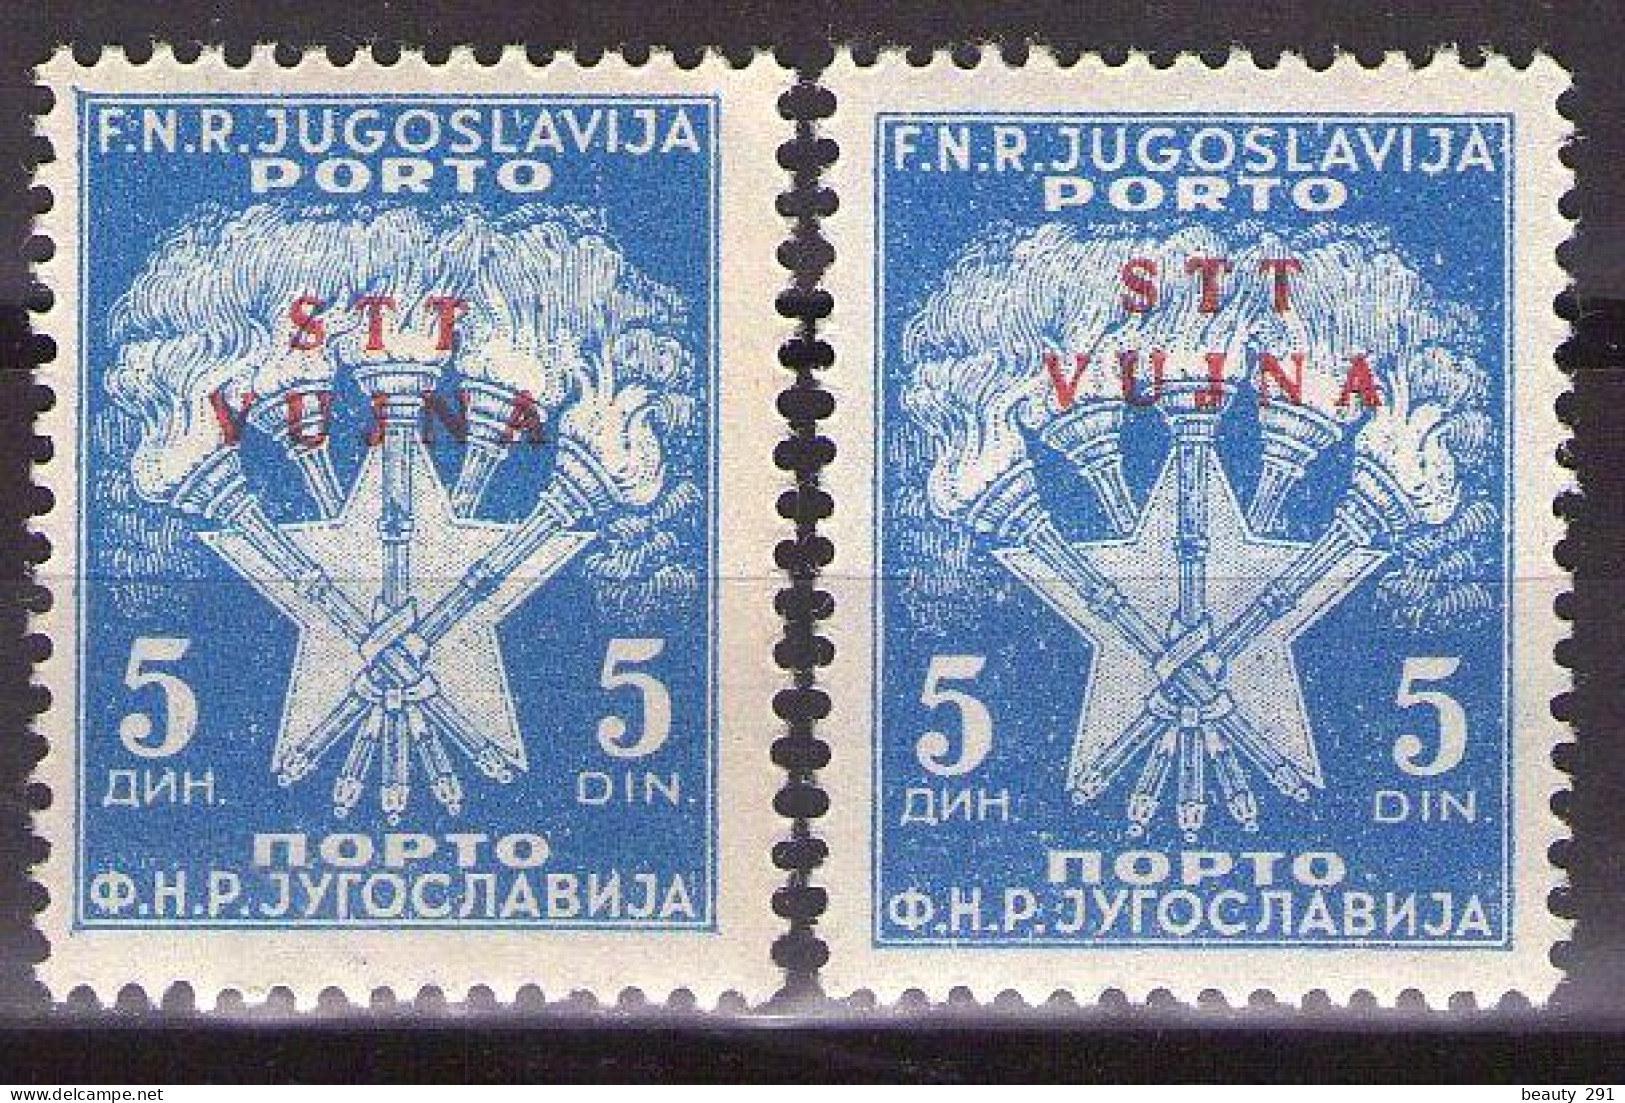 ITALIA - Trieste-Zona B -1952 - Mi 13 X 2 - POSTAGE DUE - MNH**VF - Impuestos